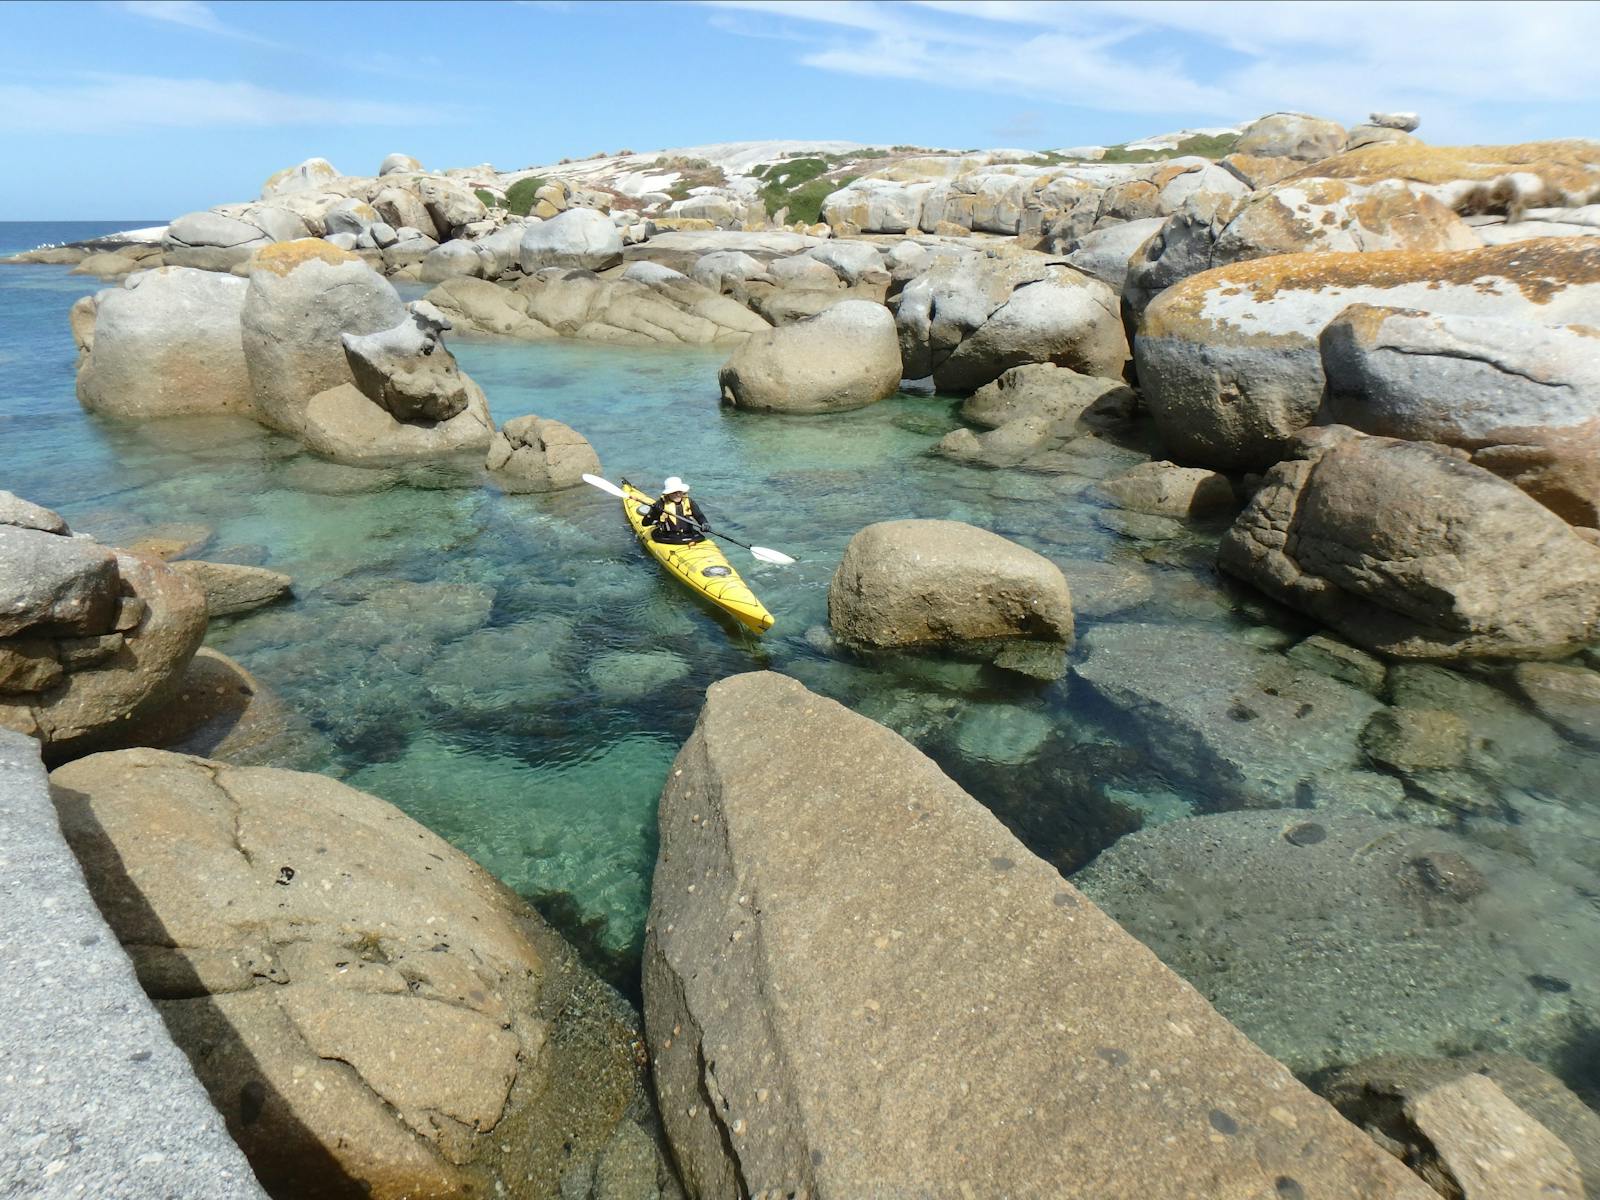 Kayaking amongst the rocks on Flinders Island